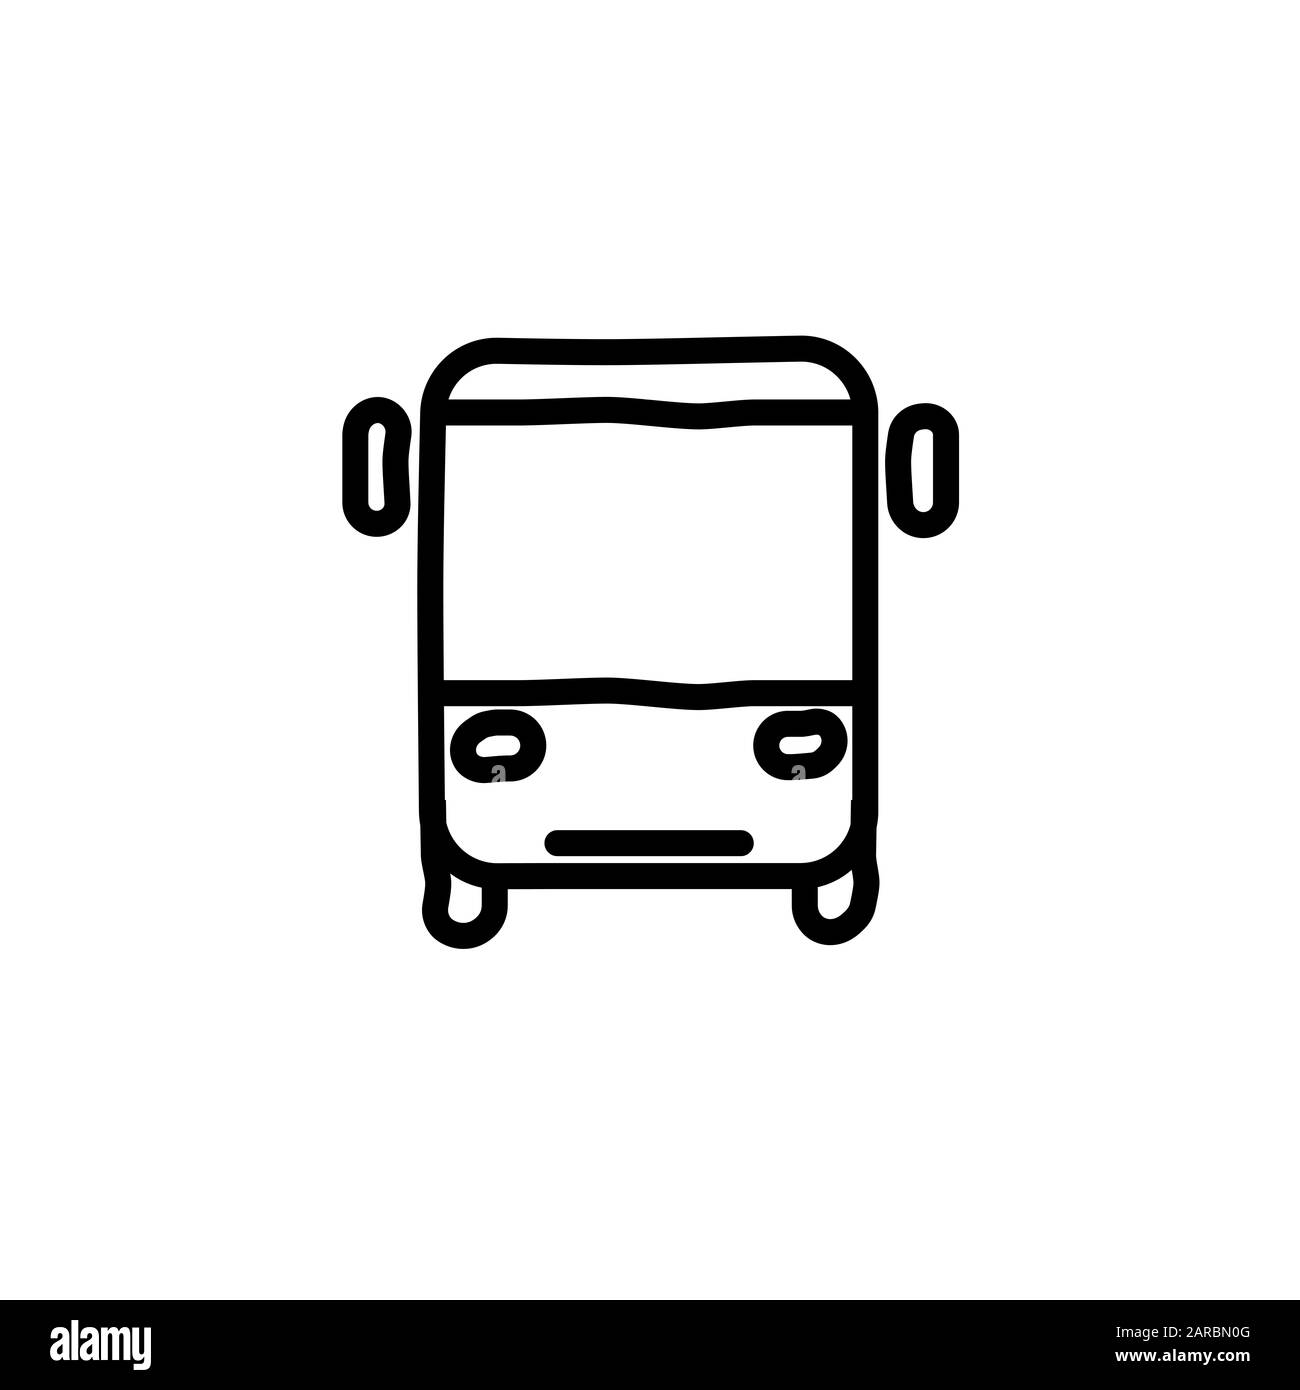 bus icon line design template Stock Photo